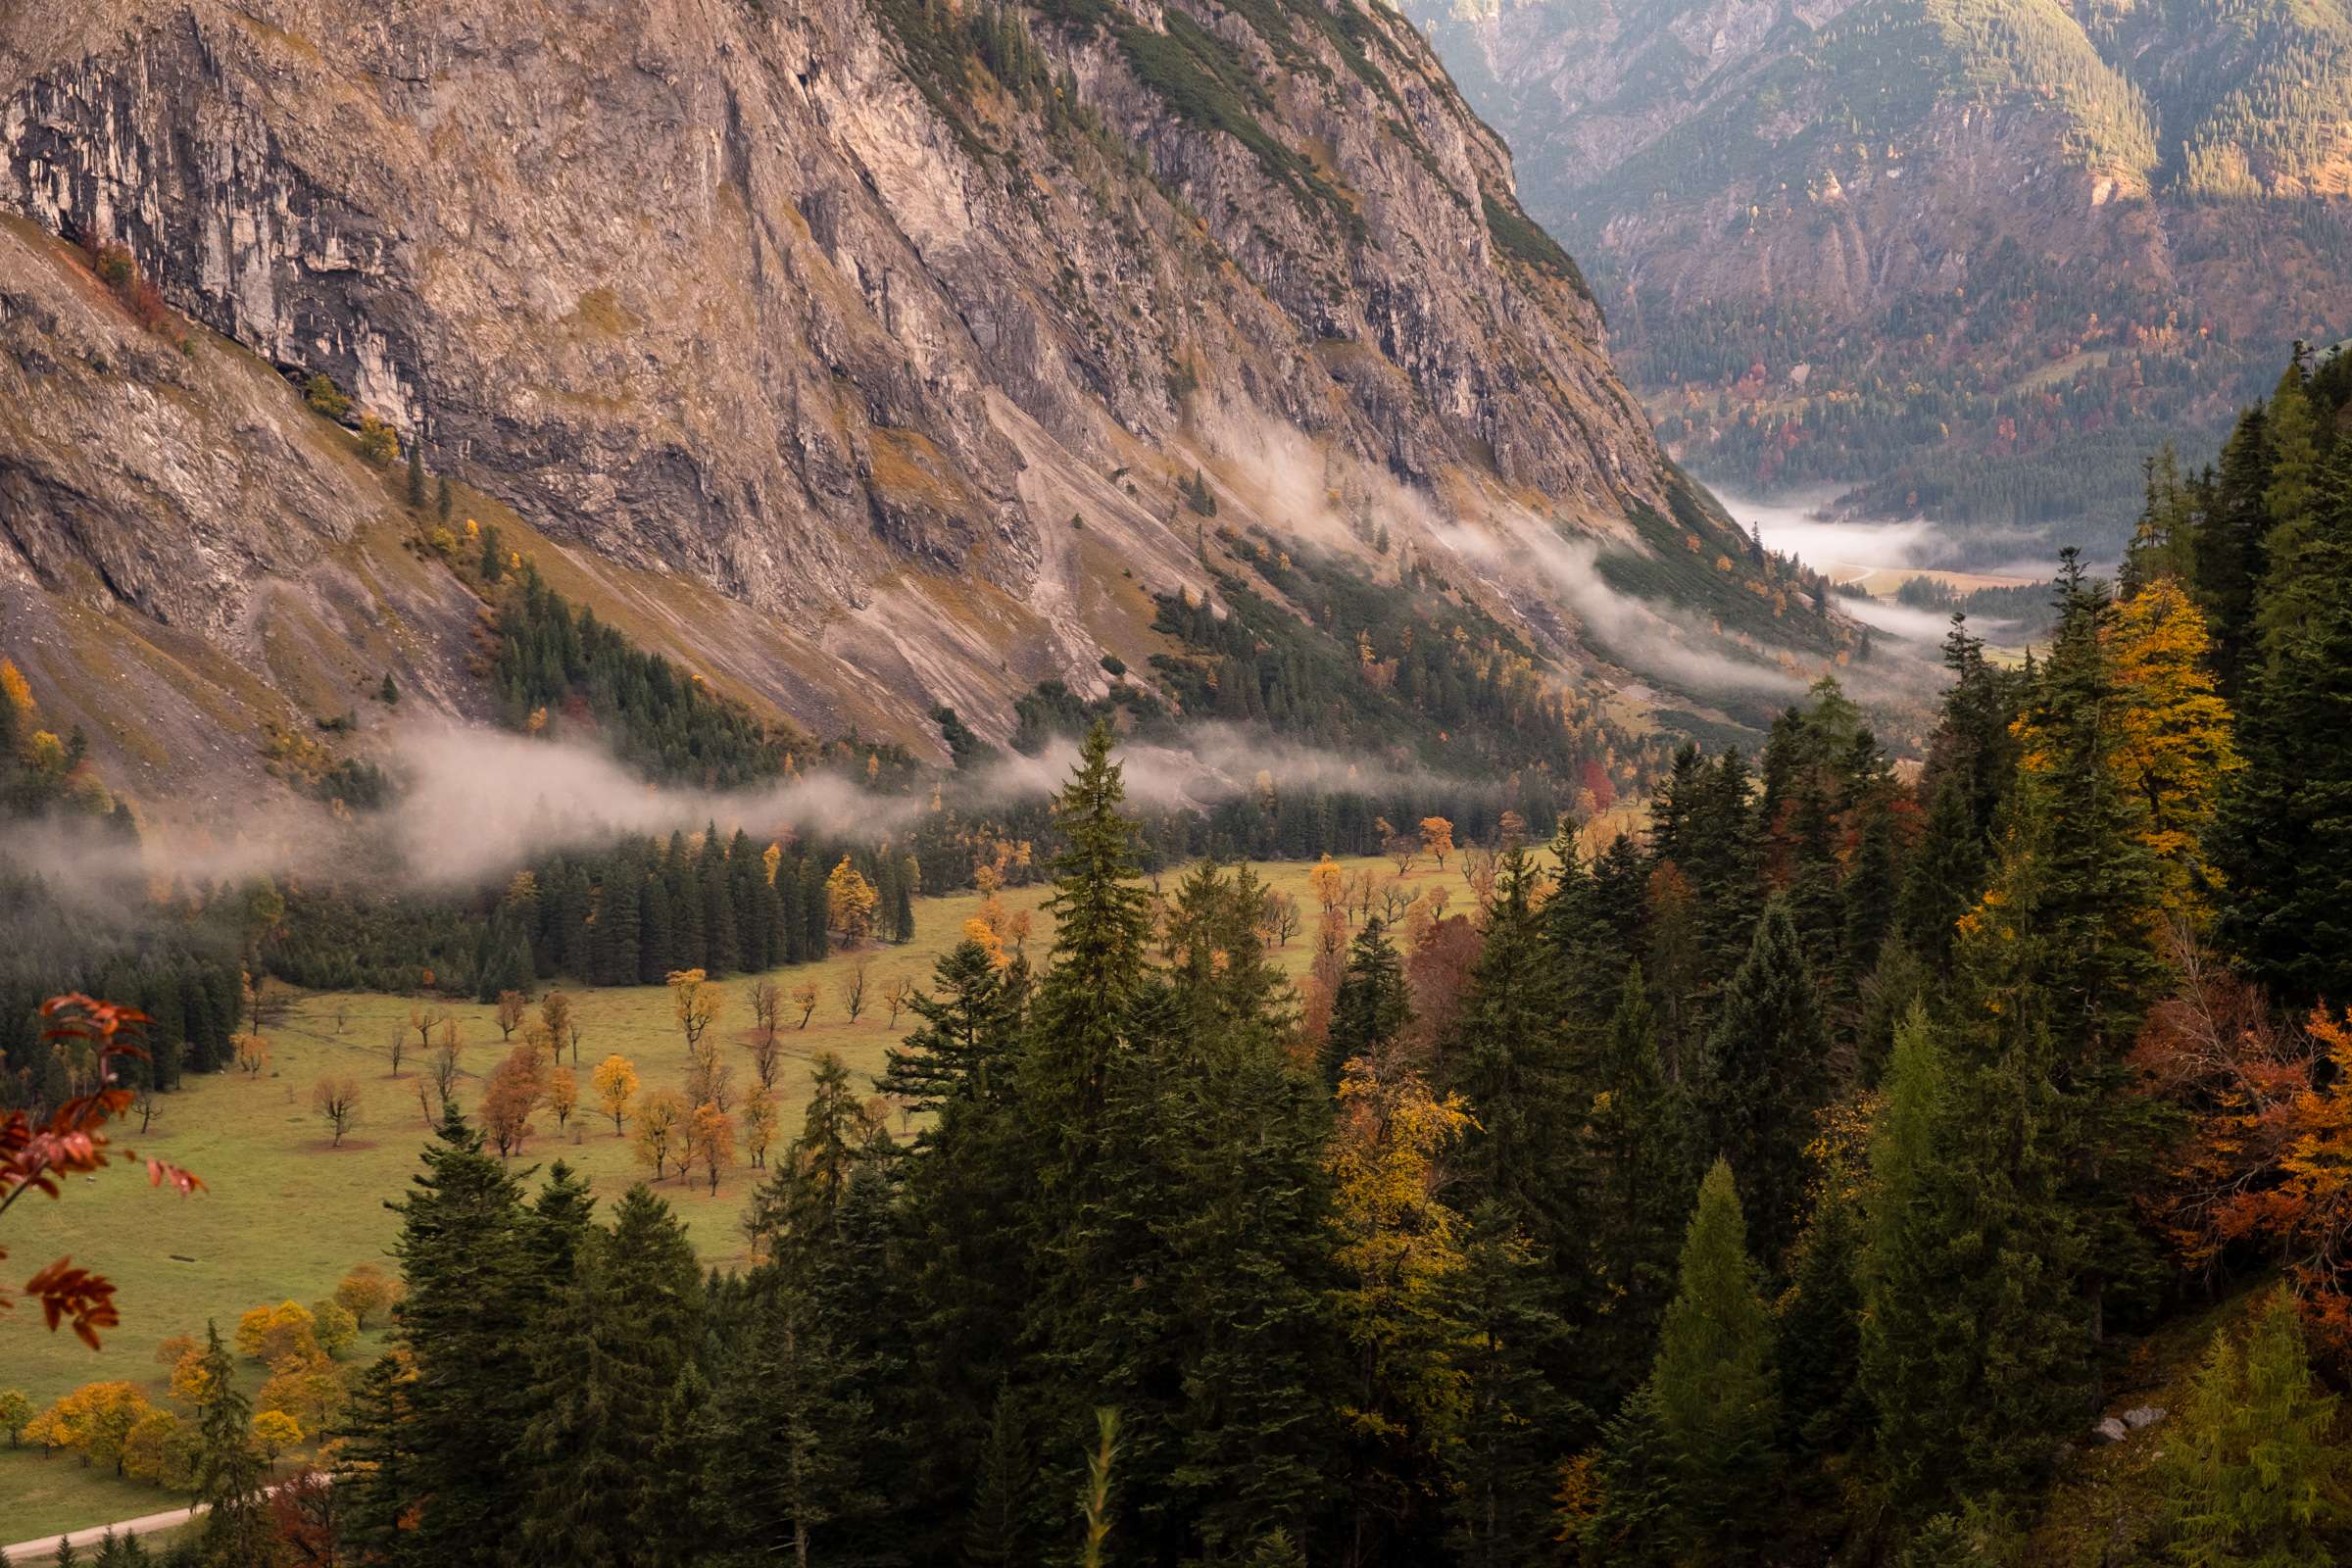 Morning mist floating through the Karwendel valley